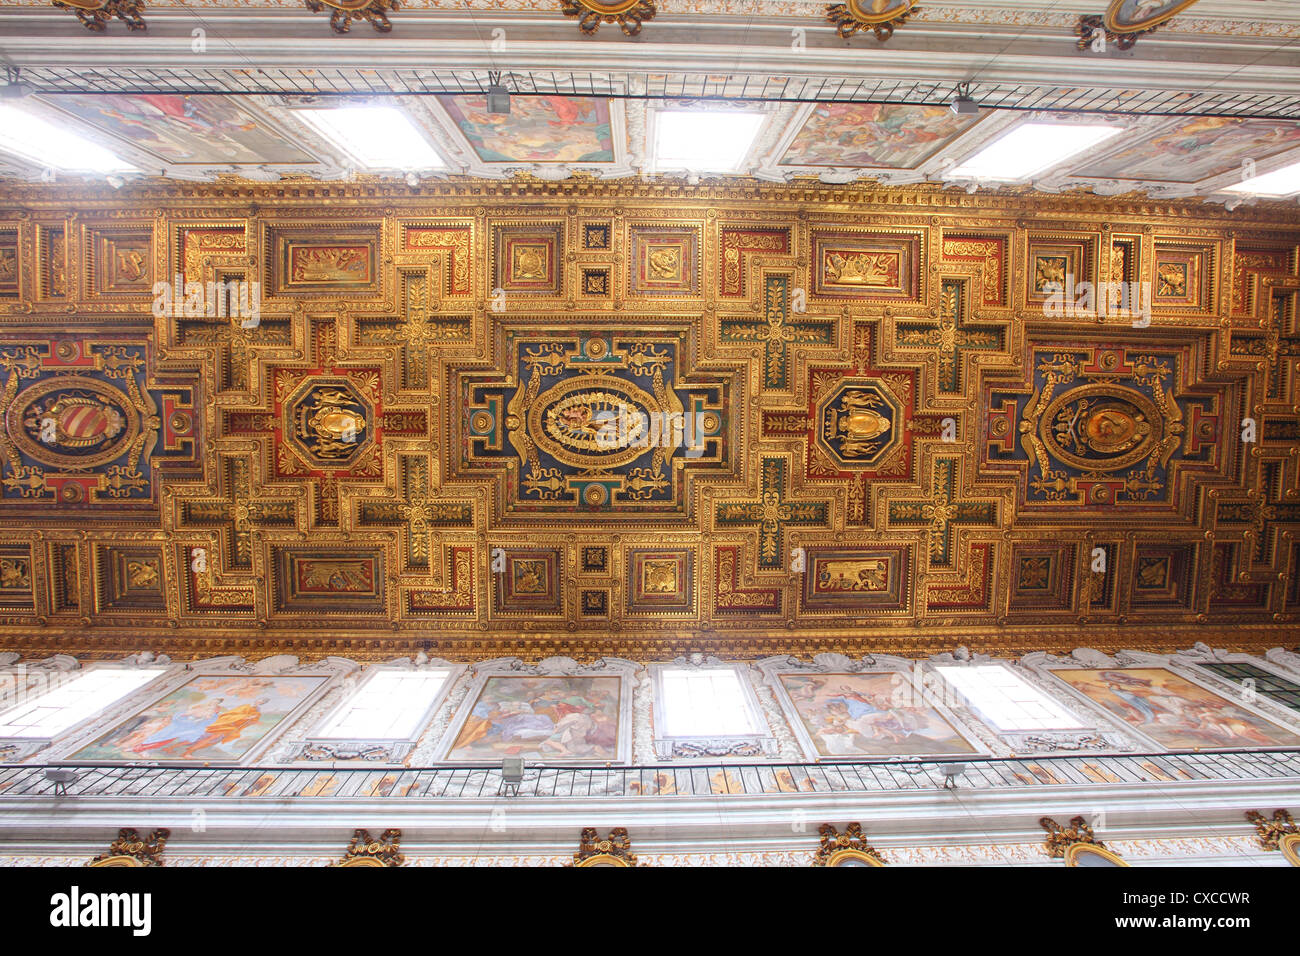 Italy, Rome, Capitoline Hill, Santa Maria in Aracoeli, Basilica of, inside, interior Stock Photo